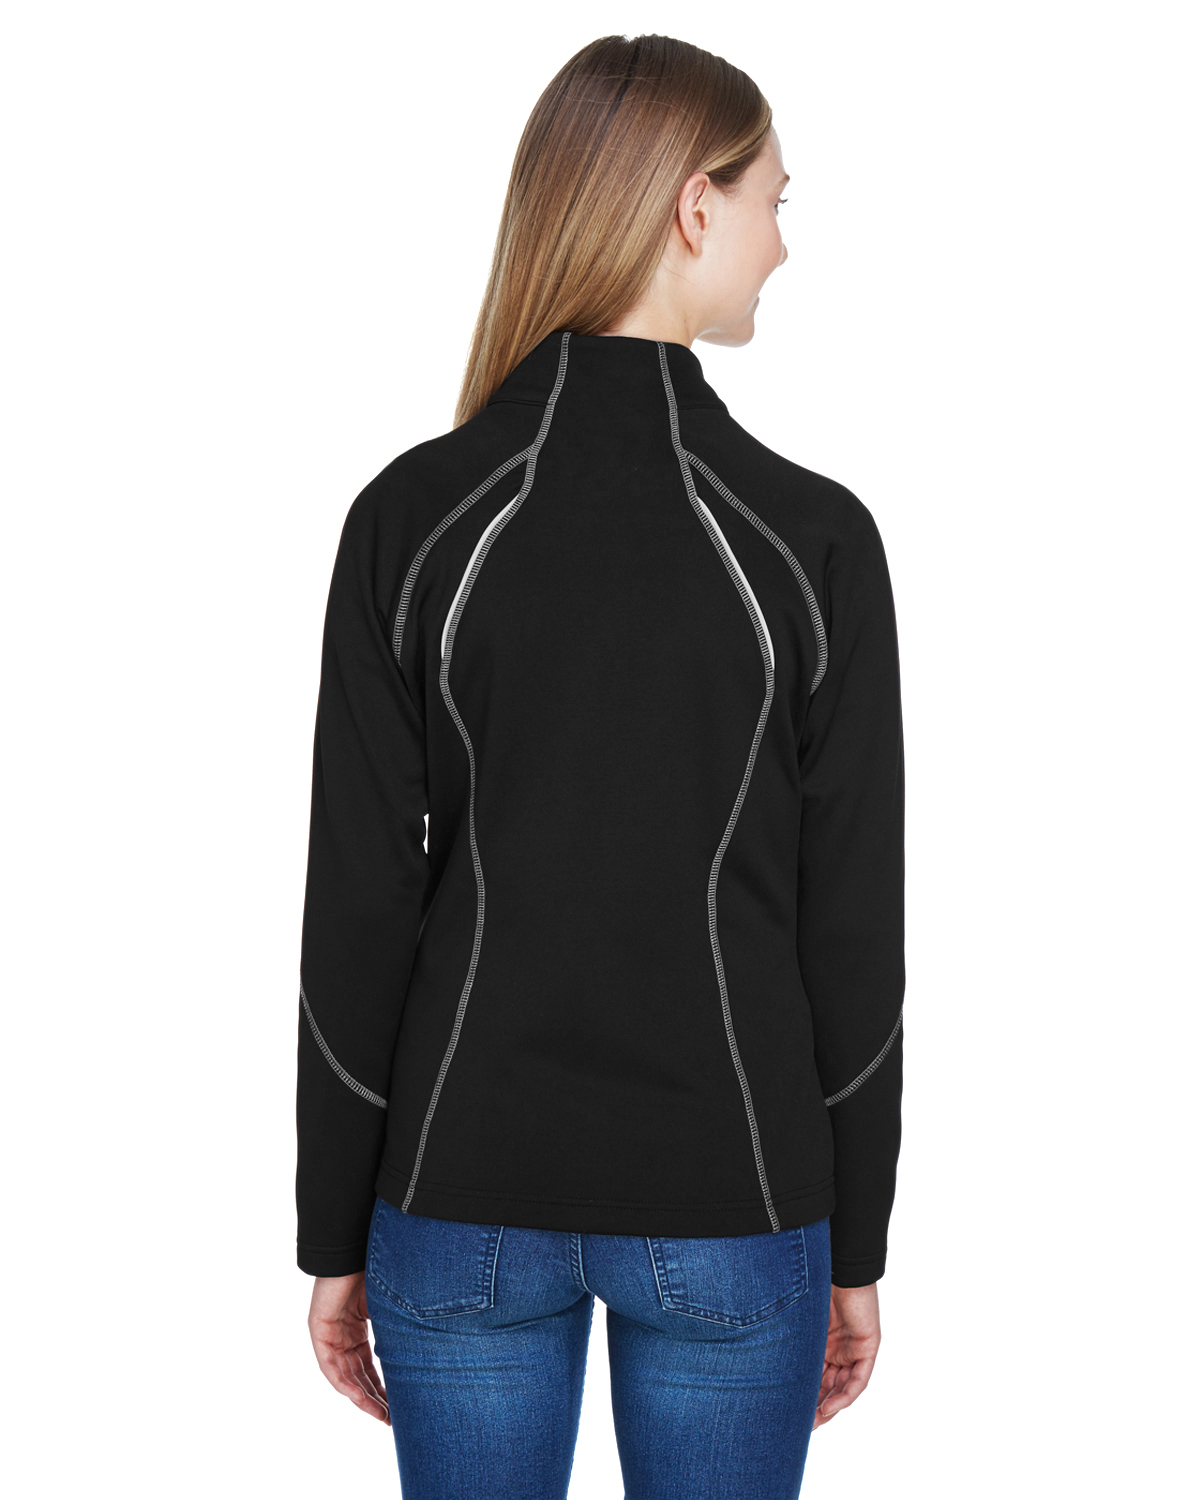 Ladies' Gravity Performance Fleece Jacket - BLACK - S - image 2 of 3